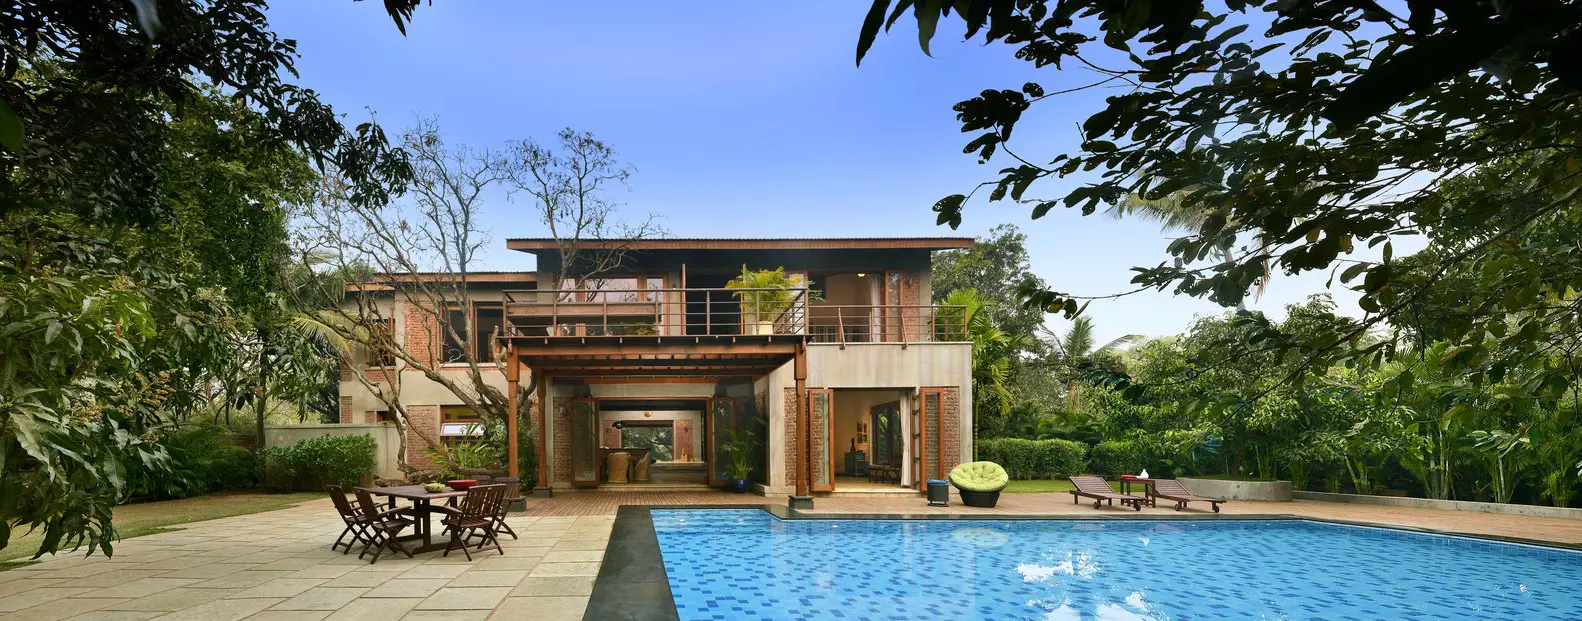 architecture sobre minimale materiaux bruts grande terrasse avec piscine luxe minimalisme